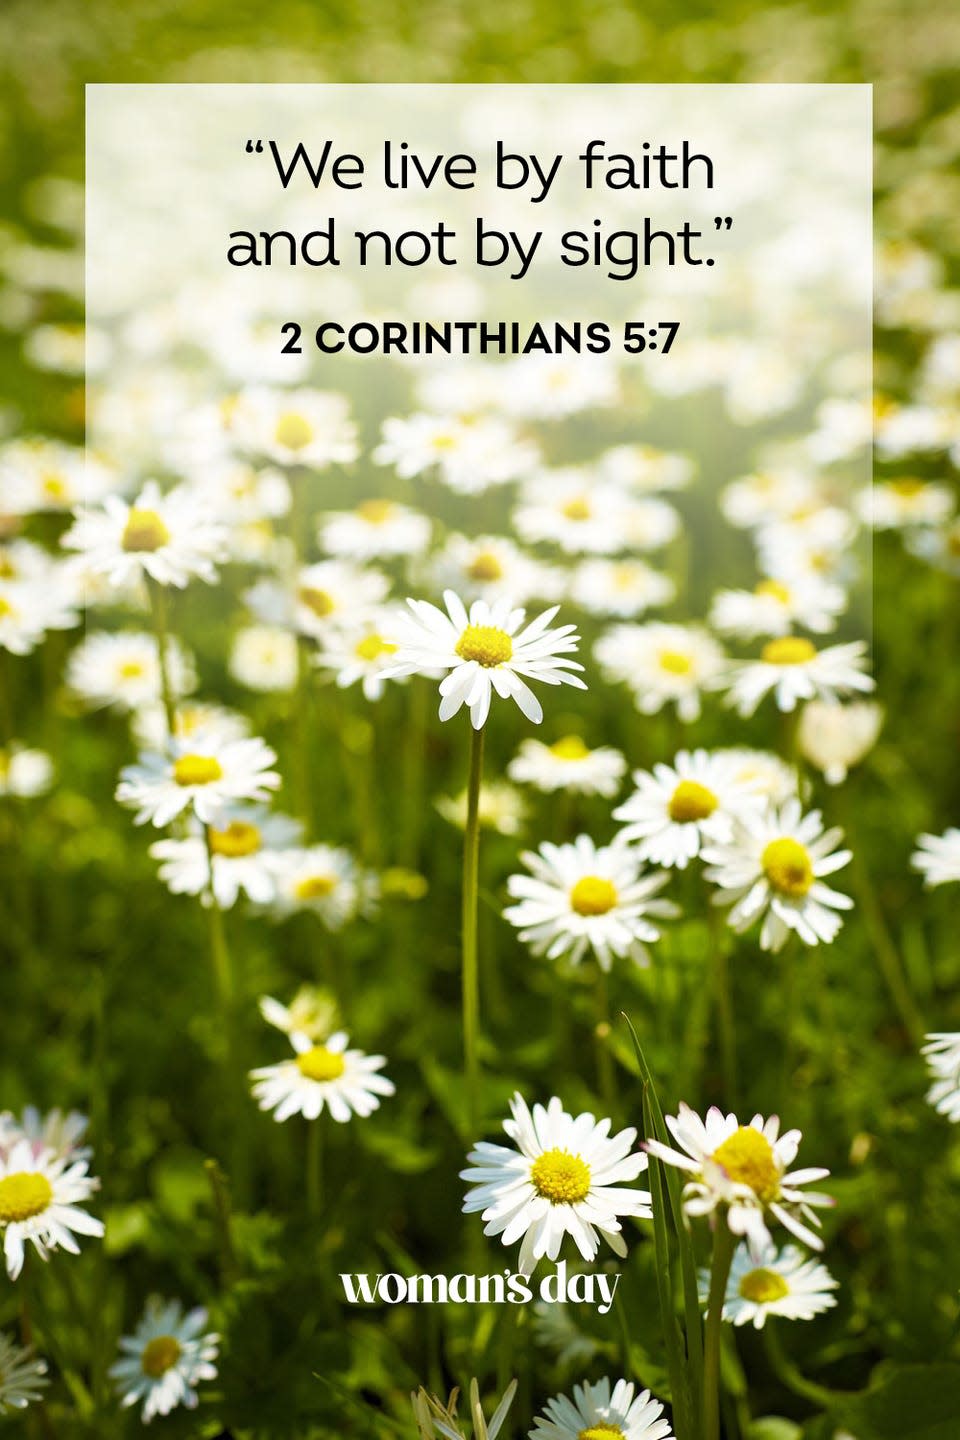 15) 2 Corinthians 5:7